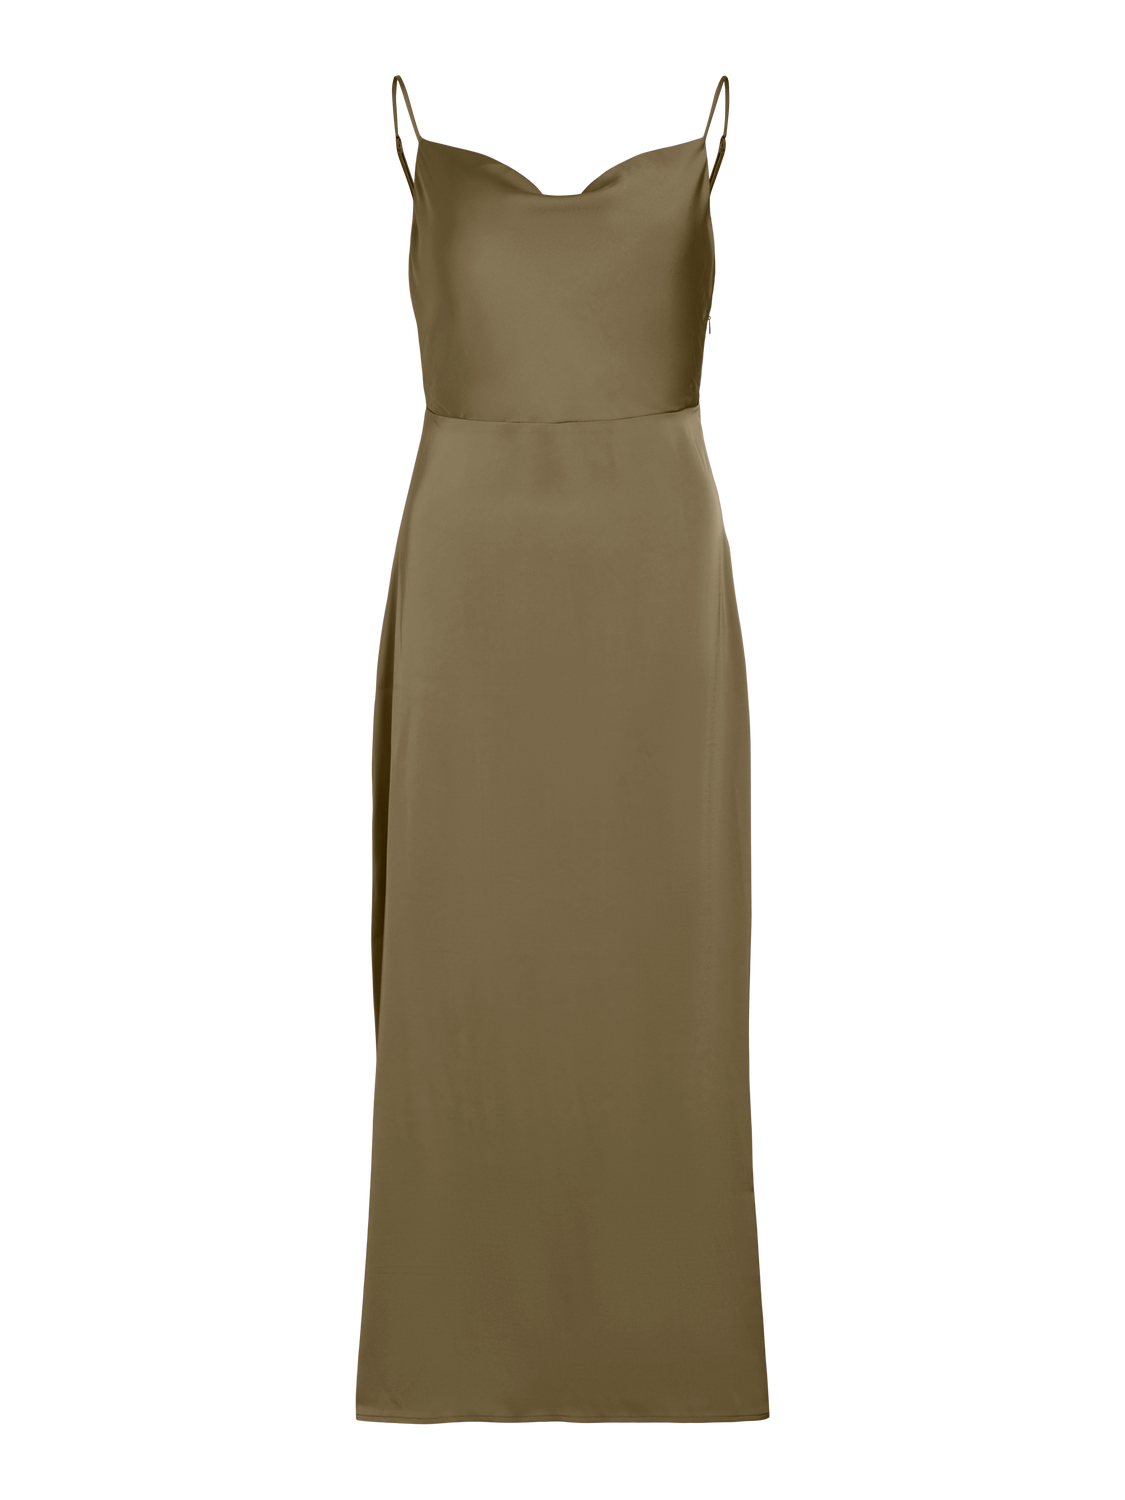 VIRAVENNA Dress - Gothic Olive